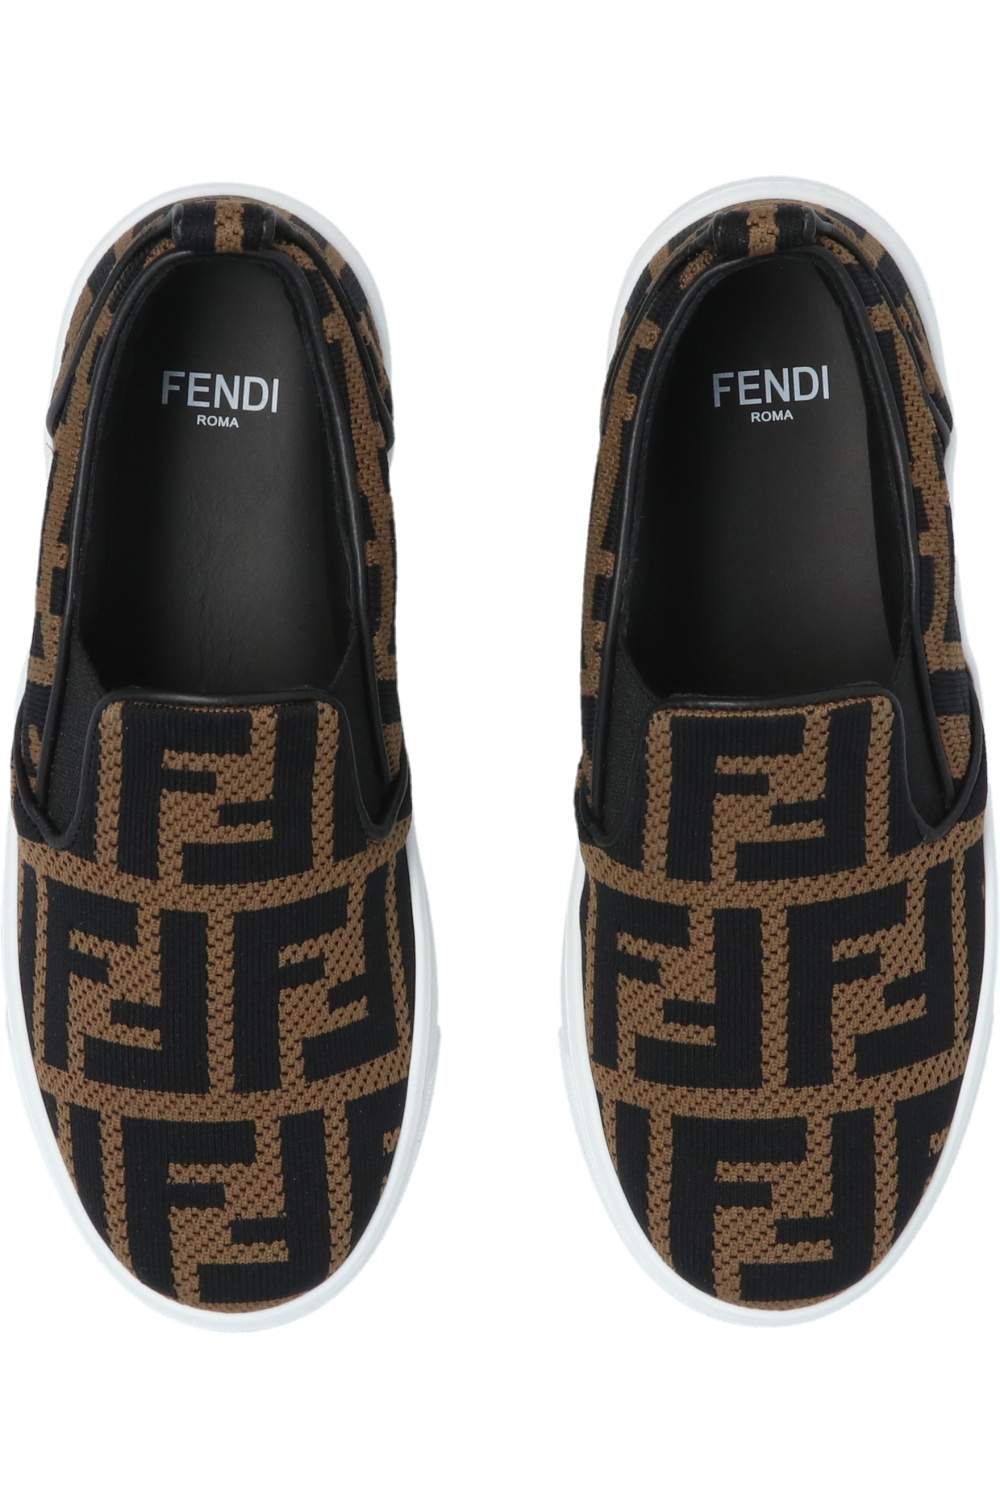 on shoes boots Fendi Kids - Sandal Shoes boots ZS22th04 T3B2-32257 -  IetpShops Morocco - Slip